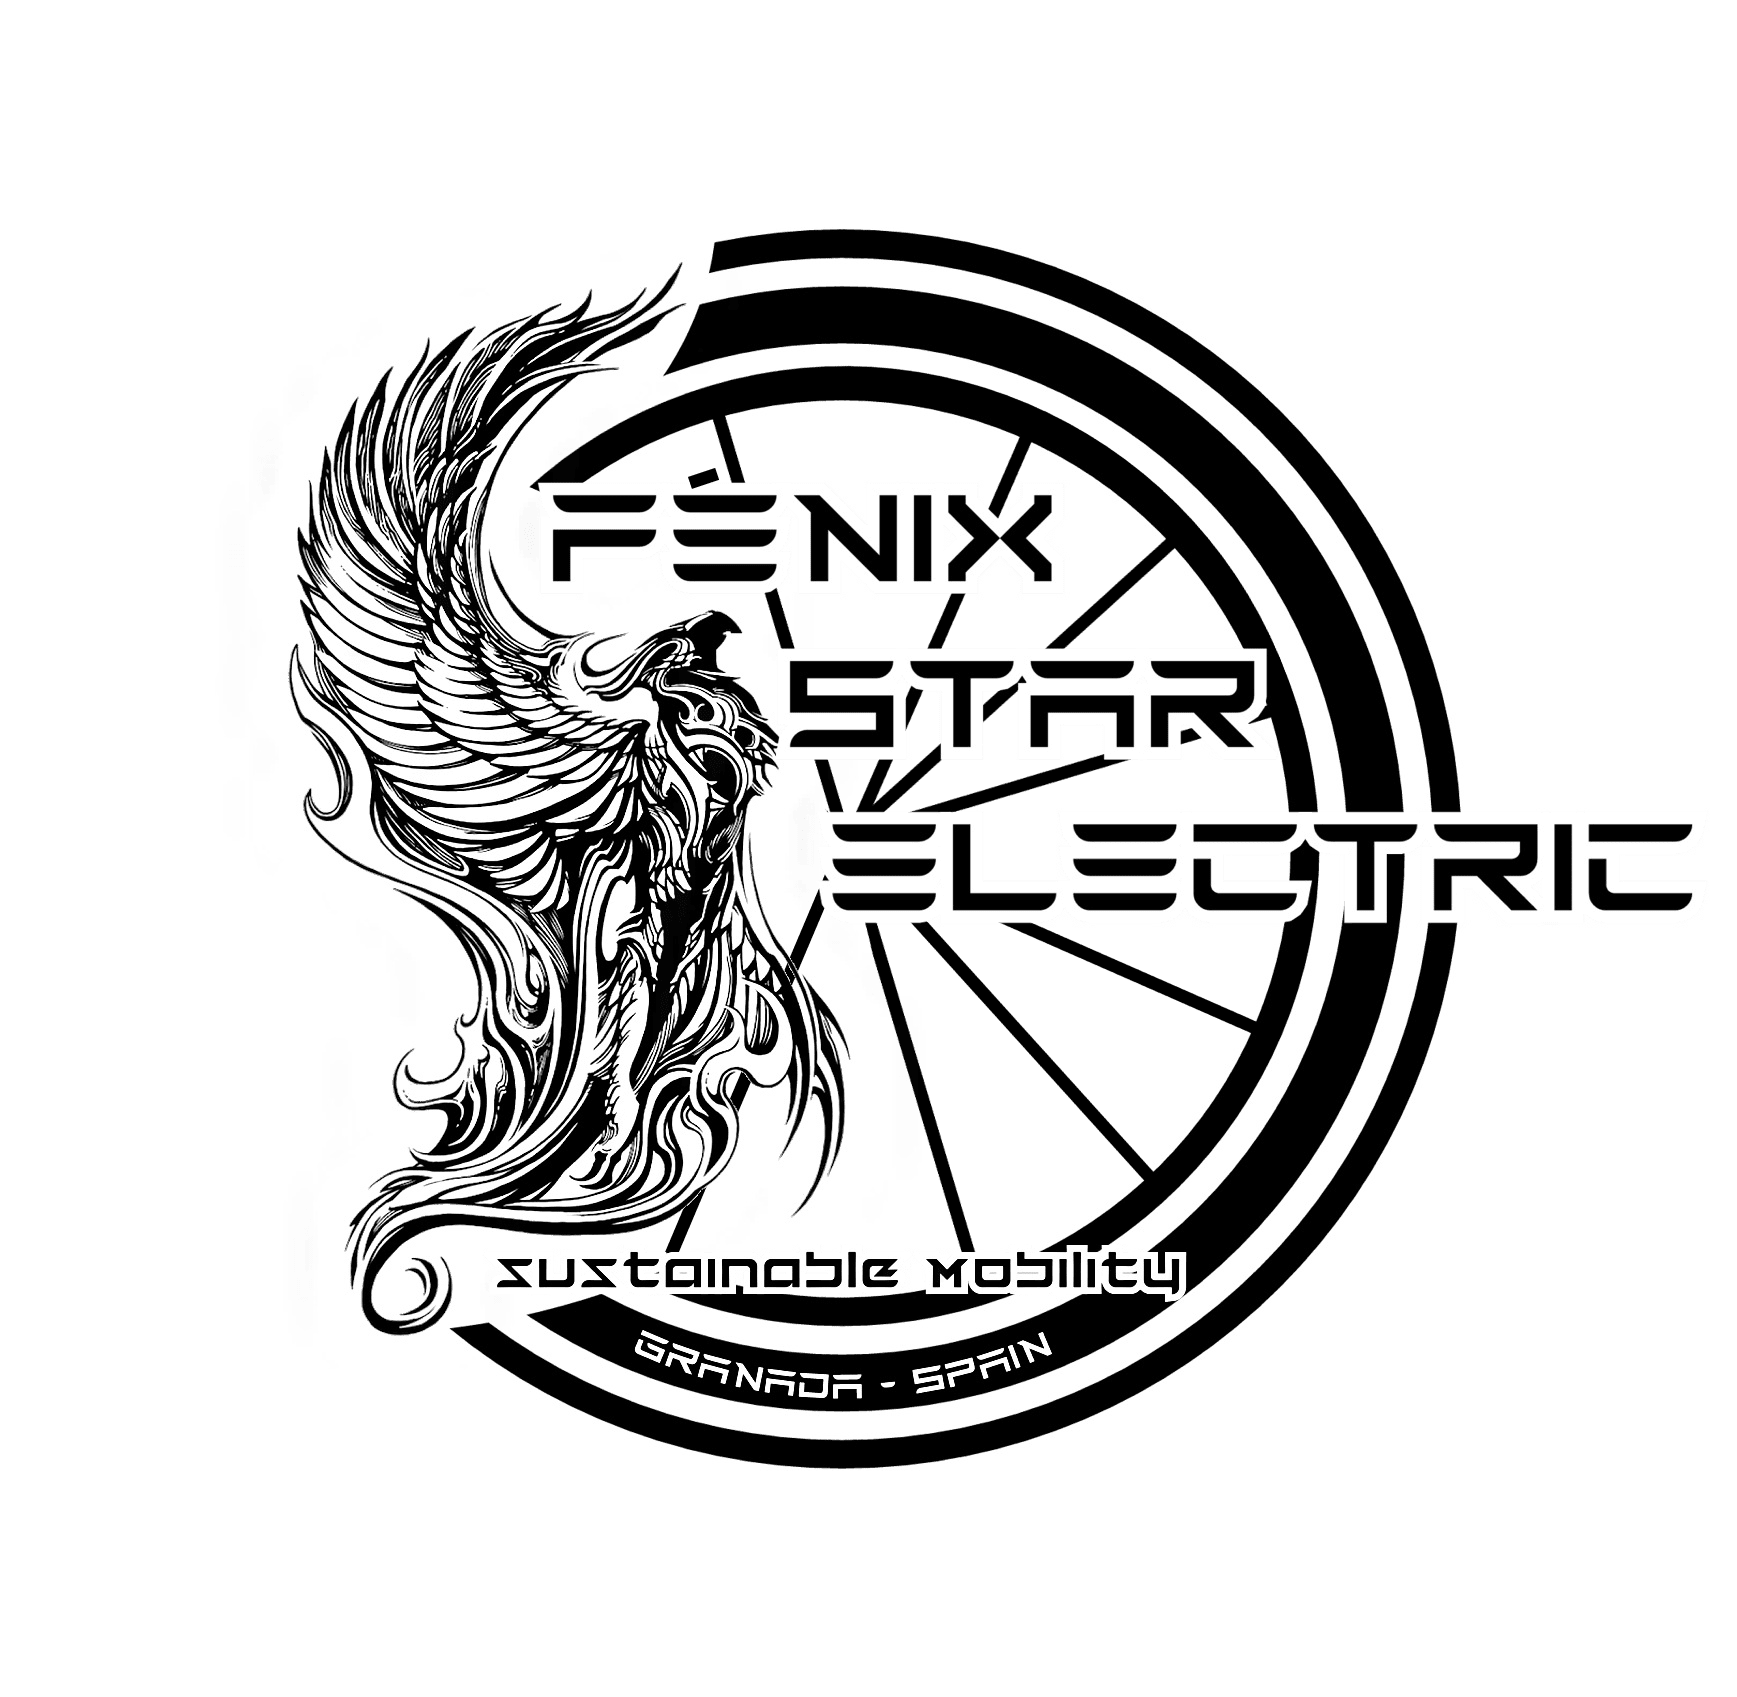 Fénix Star Electric